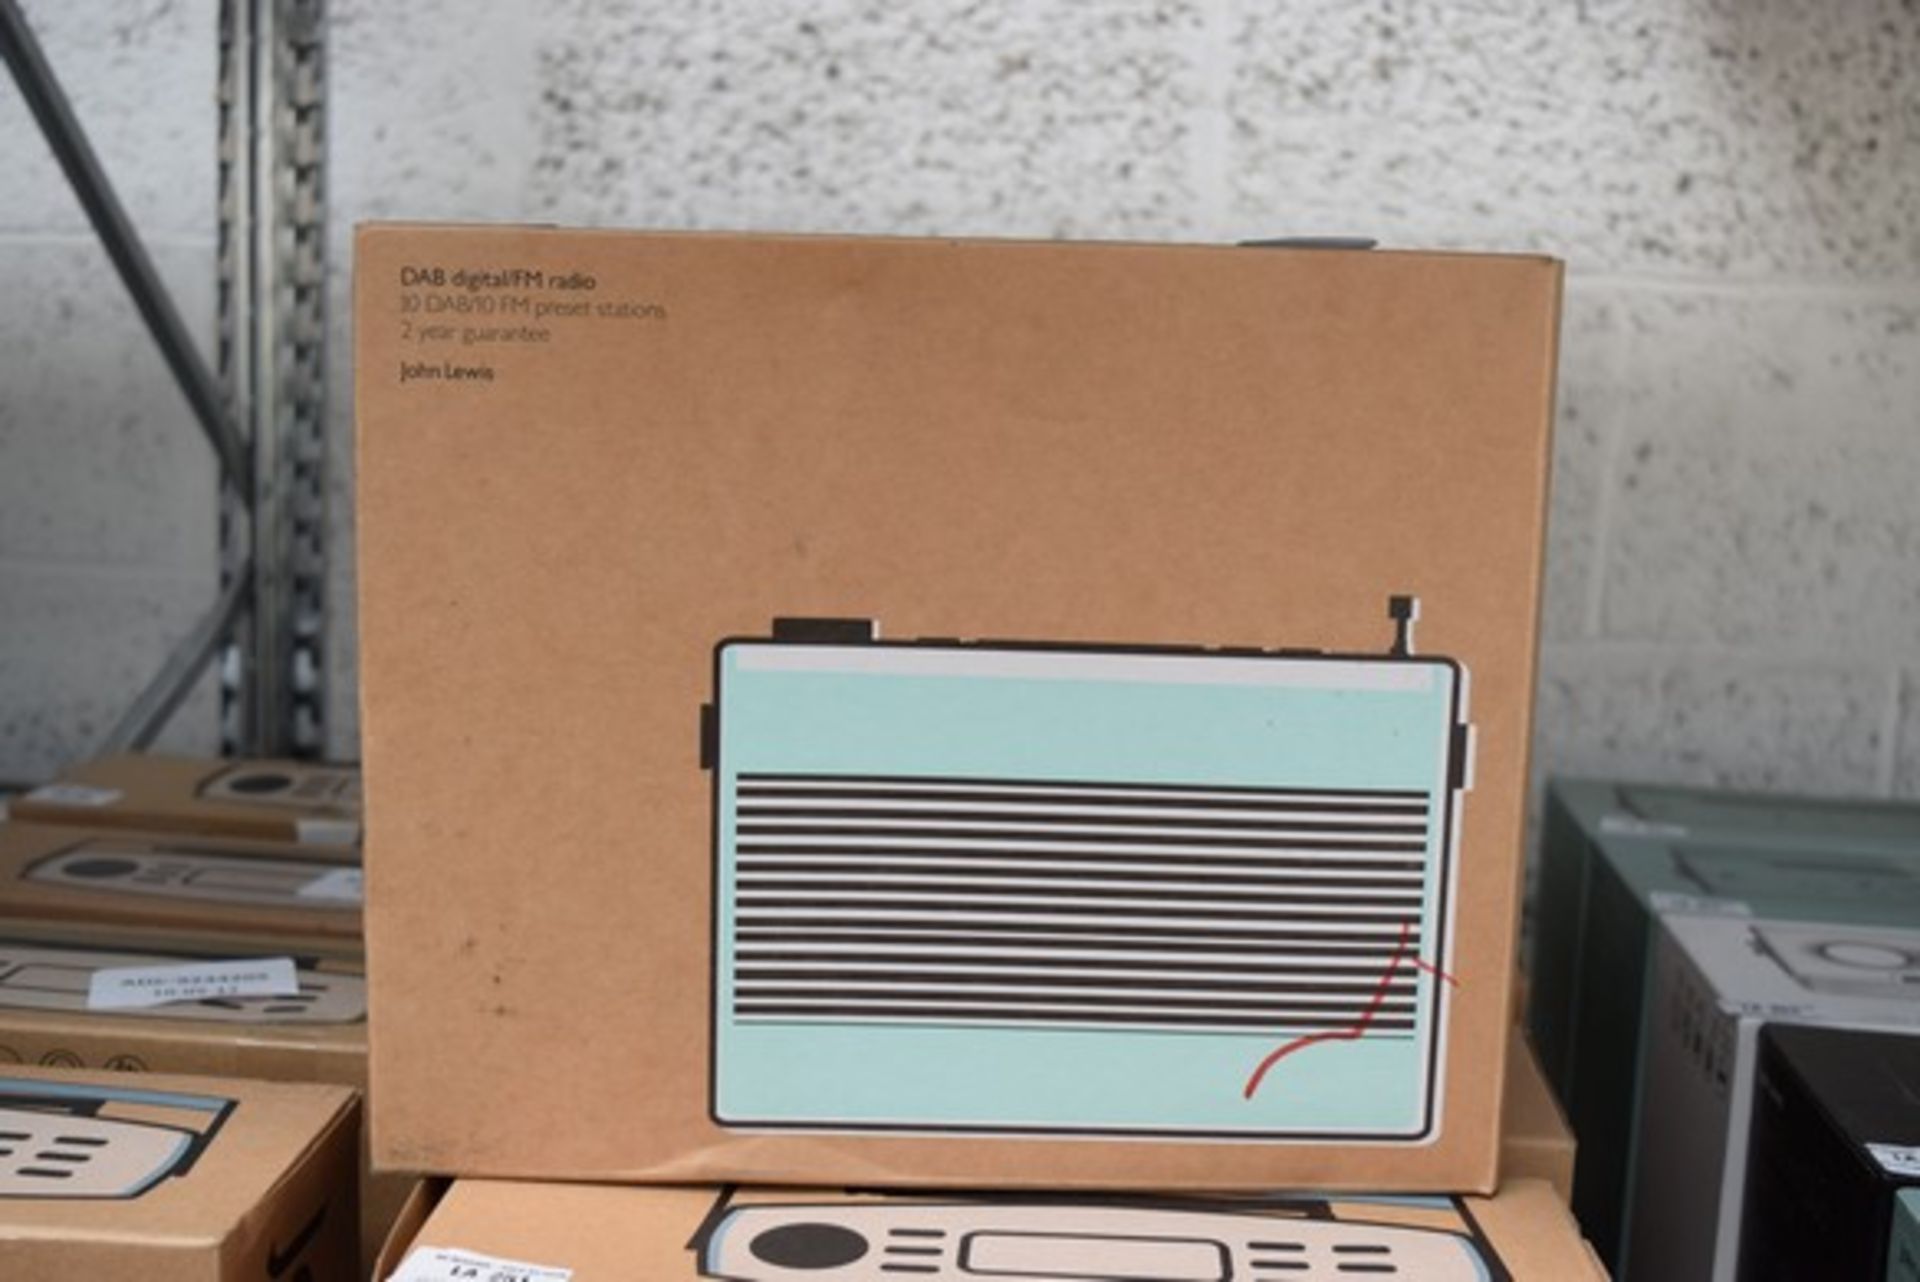 1 X BOXED JL DAB FM DIGITAL RADIO WITH 10 PRE SET STATIONS RRP £35 10.05.17